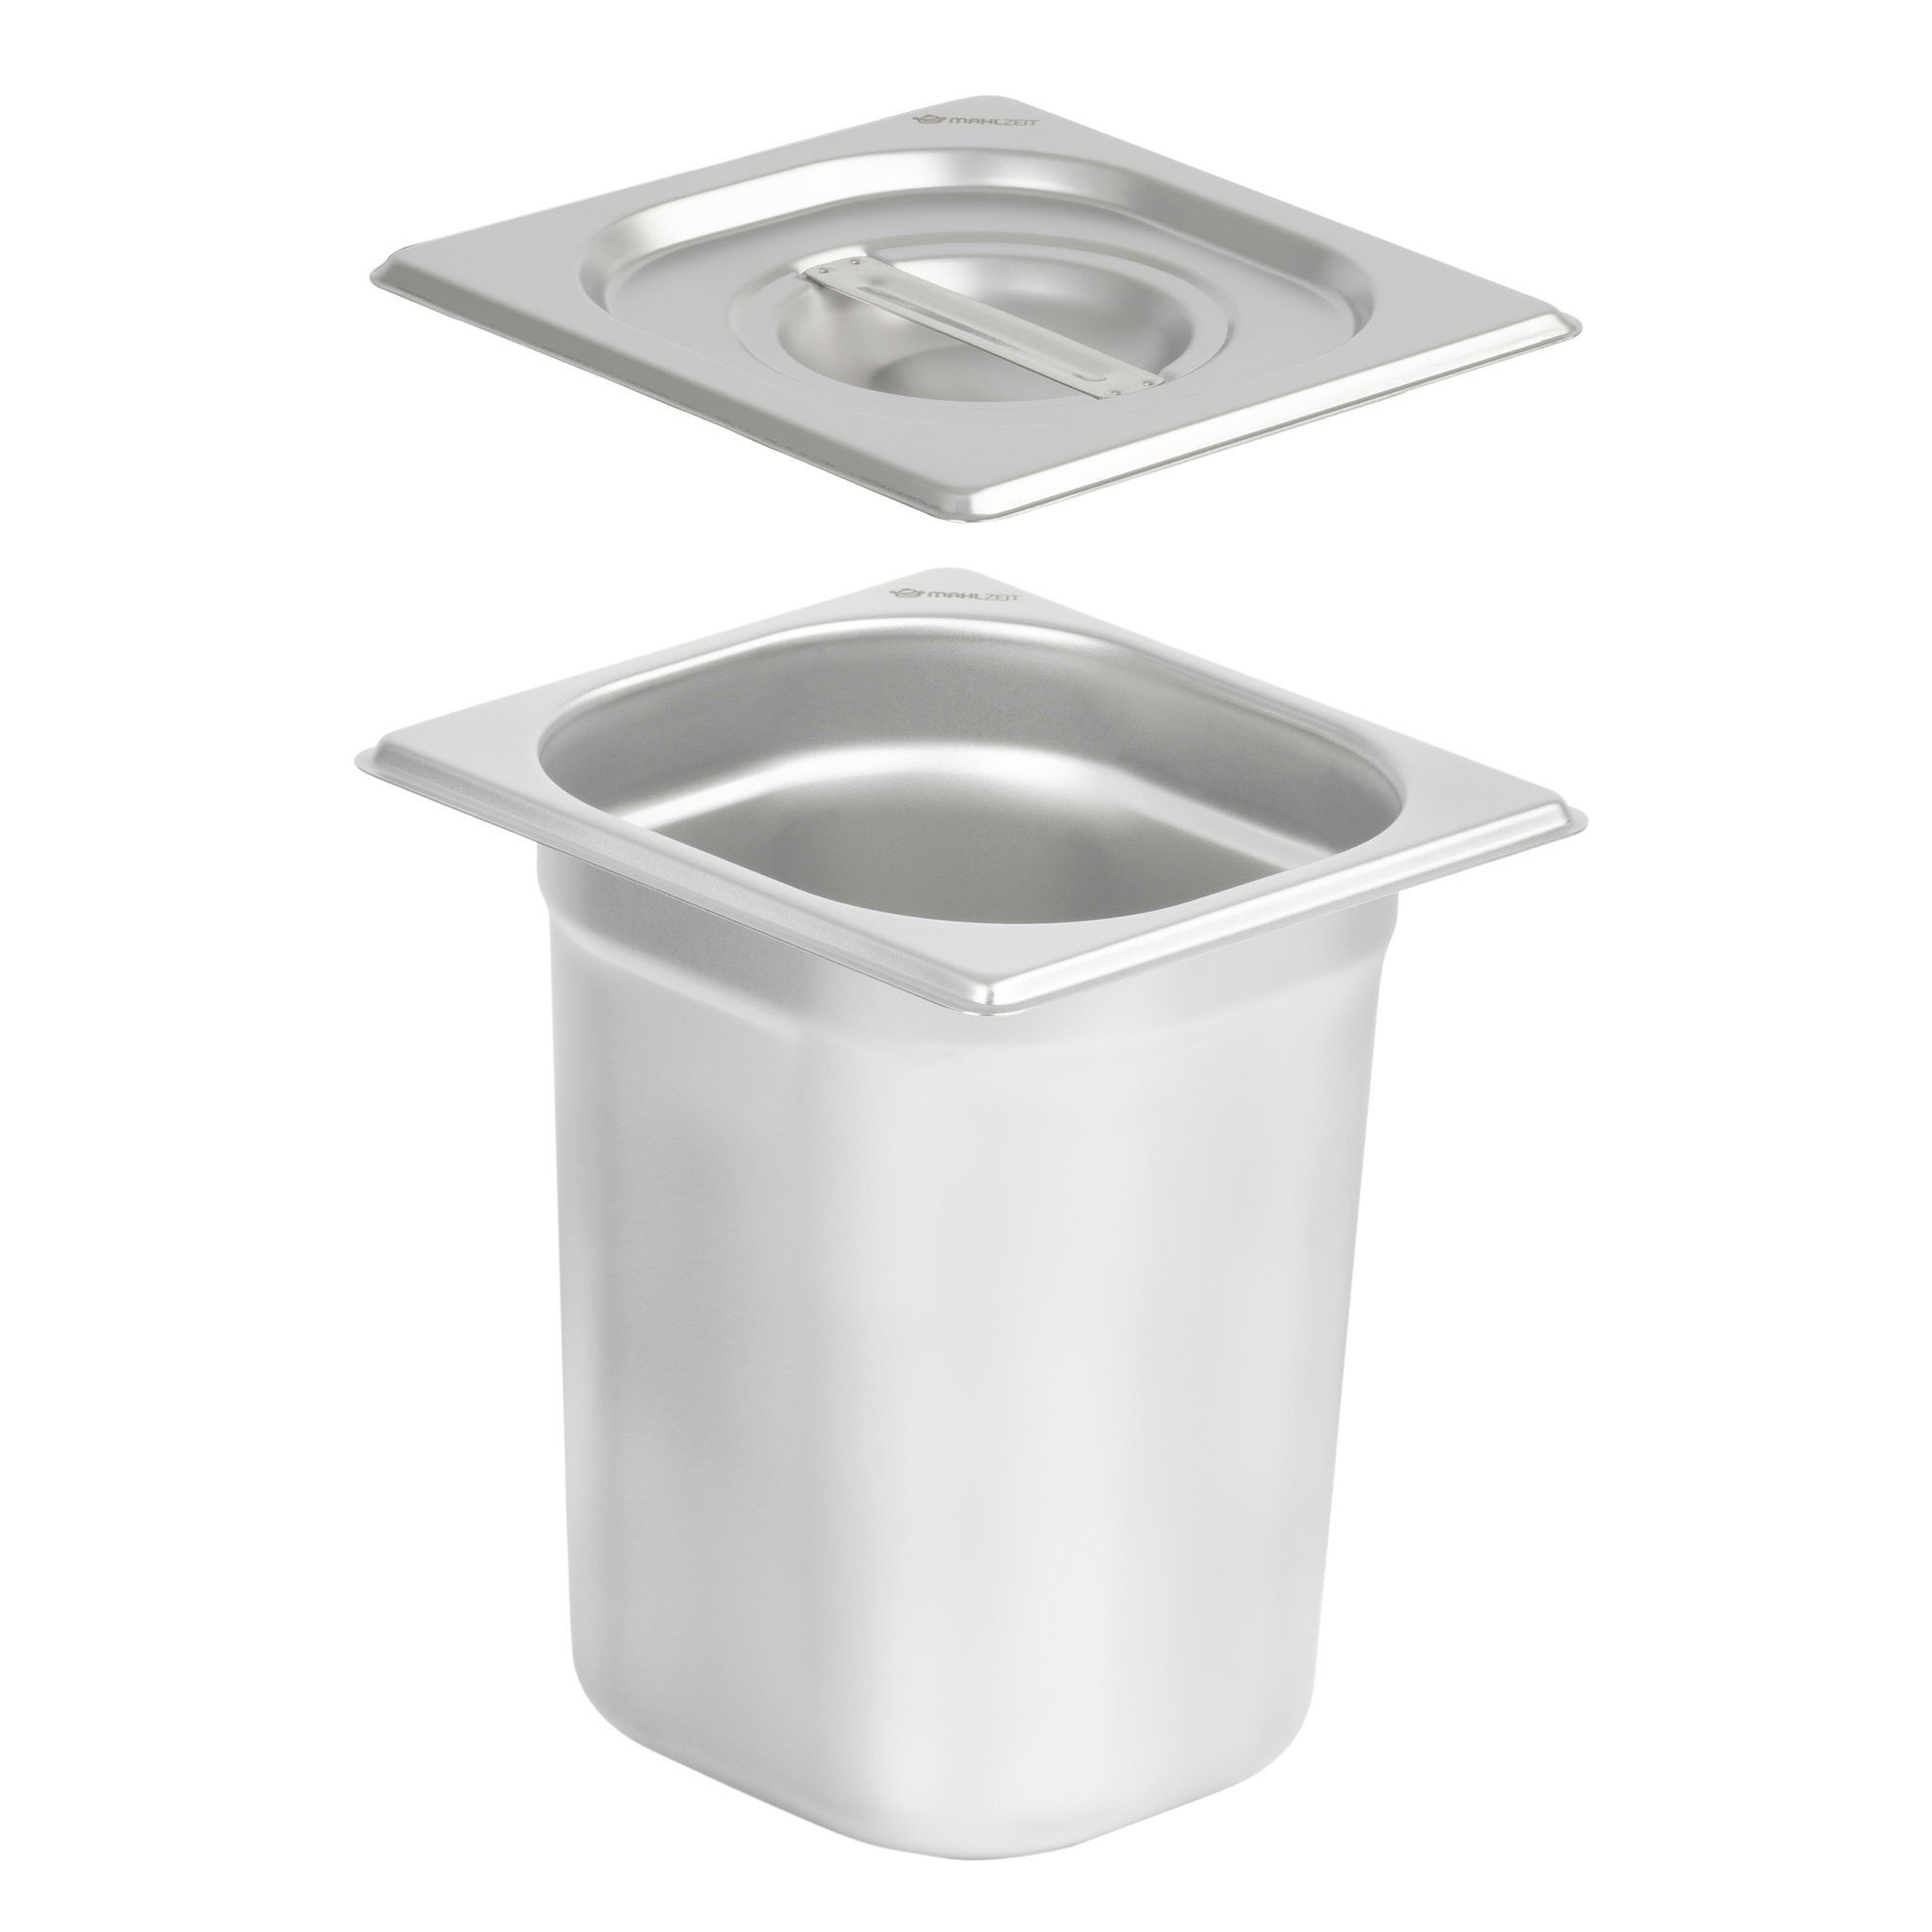 Mahlzeit Thermobehälter GN Behälter 1/6 mit Deckel, Höhe 200 mm, Edelstahl Wärmebehälter, Edelstahl, (Set, 2-tlg., 1x 1/6 GN Behälter mit Deckel(200 mm), für Chafing Dish